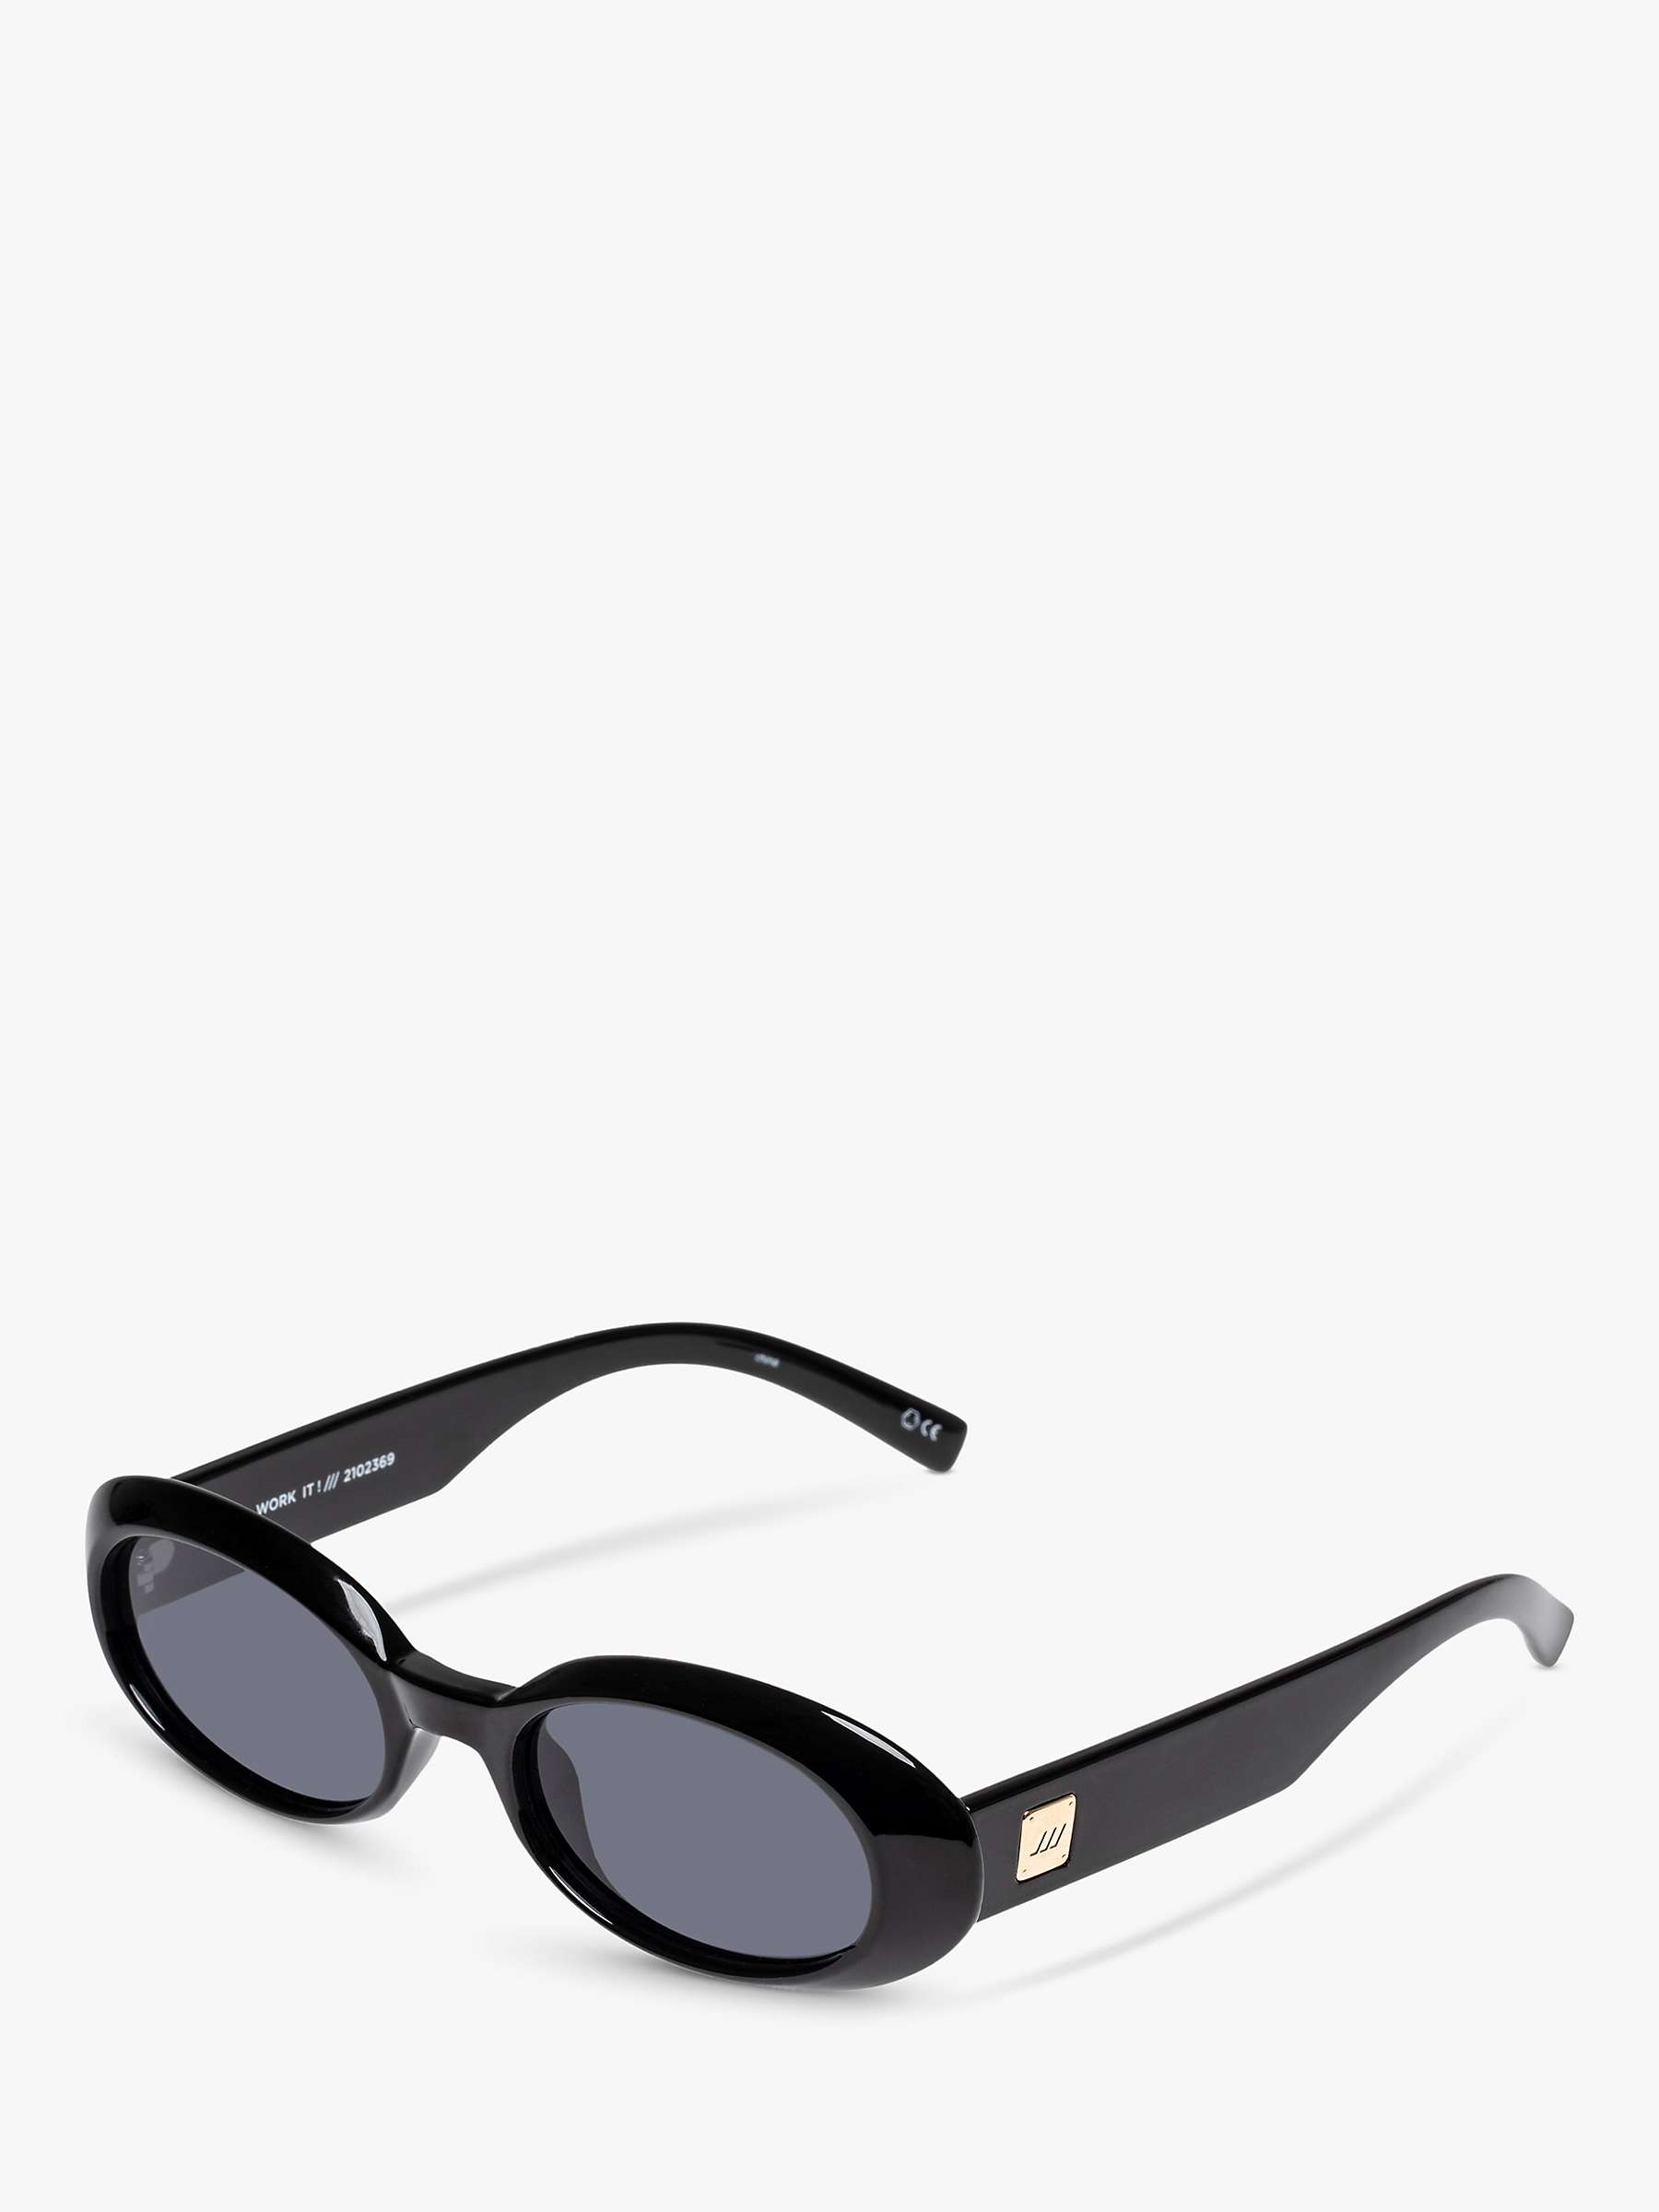 Le Specs L5000187 Women's Work It Oval Sunglasses, Black/Grey at John ...